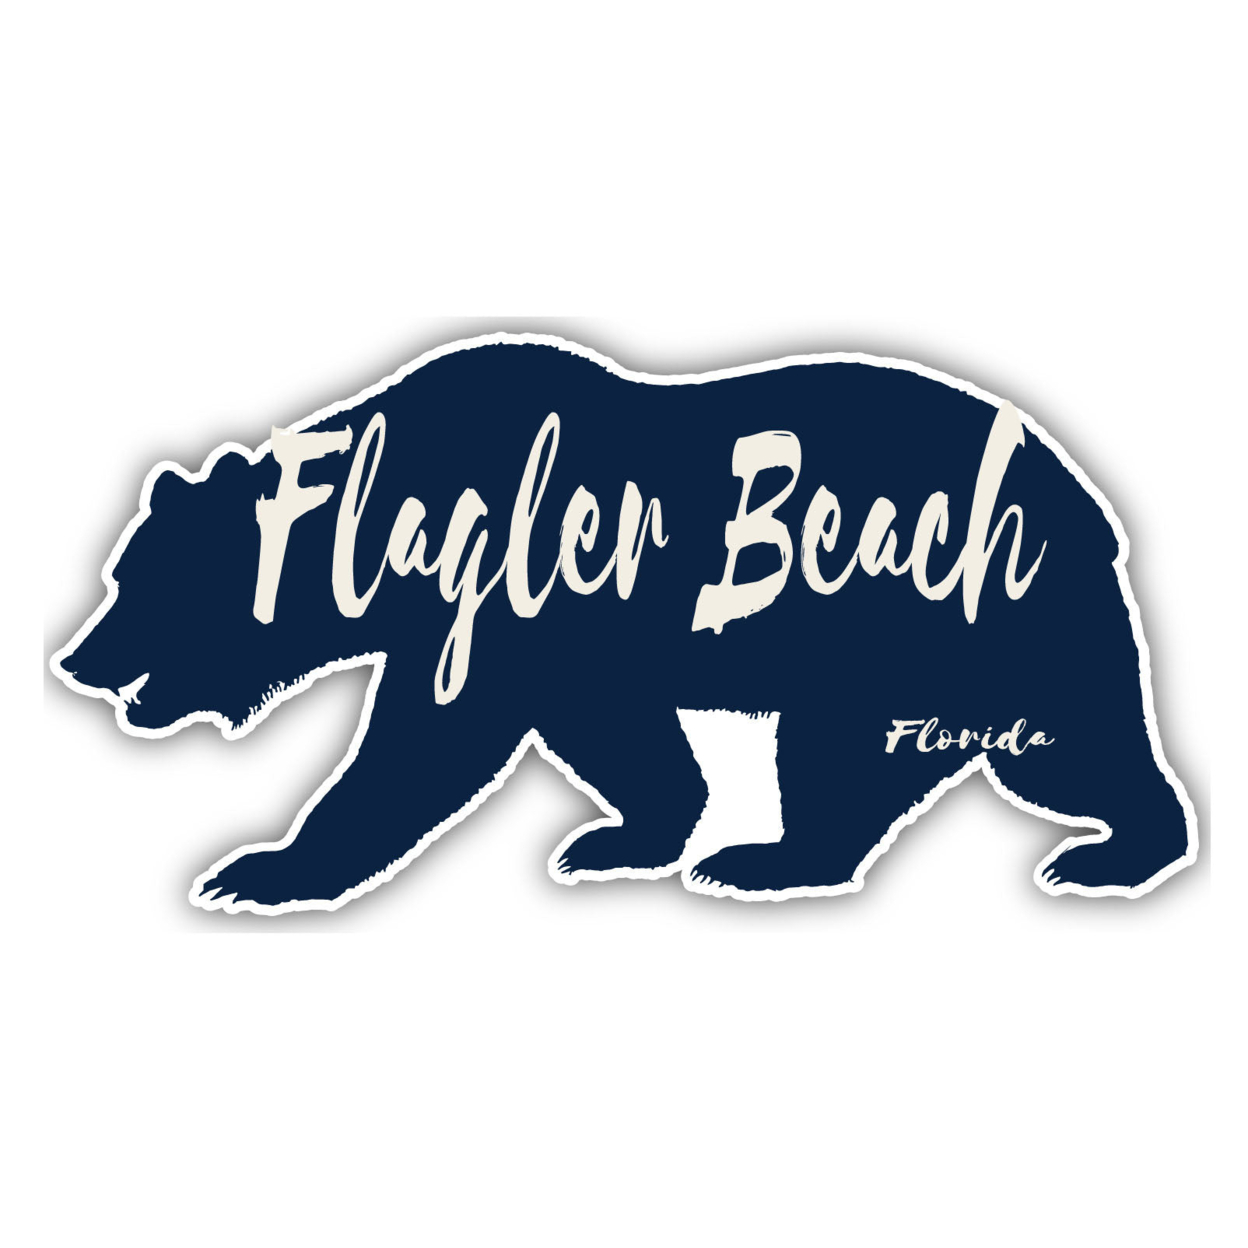 Flagler Beach Florida Souvenir Decorative Stickers (Choose Theme And Size) - Single Unit, 2-Inch, Camp Life